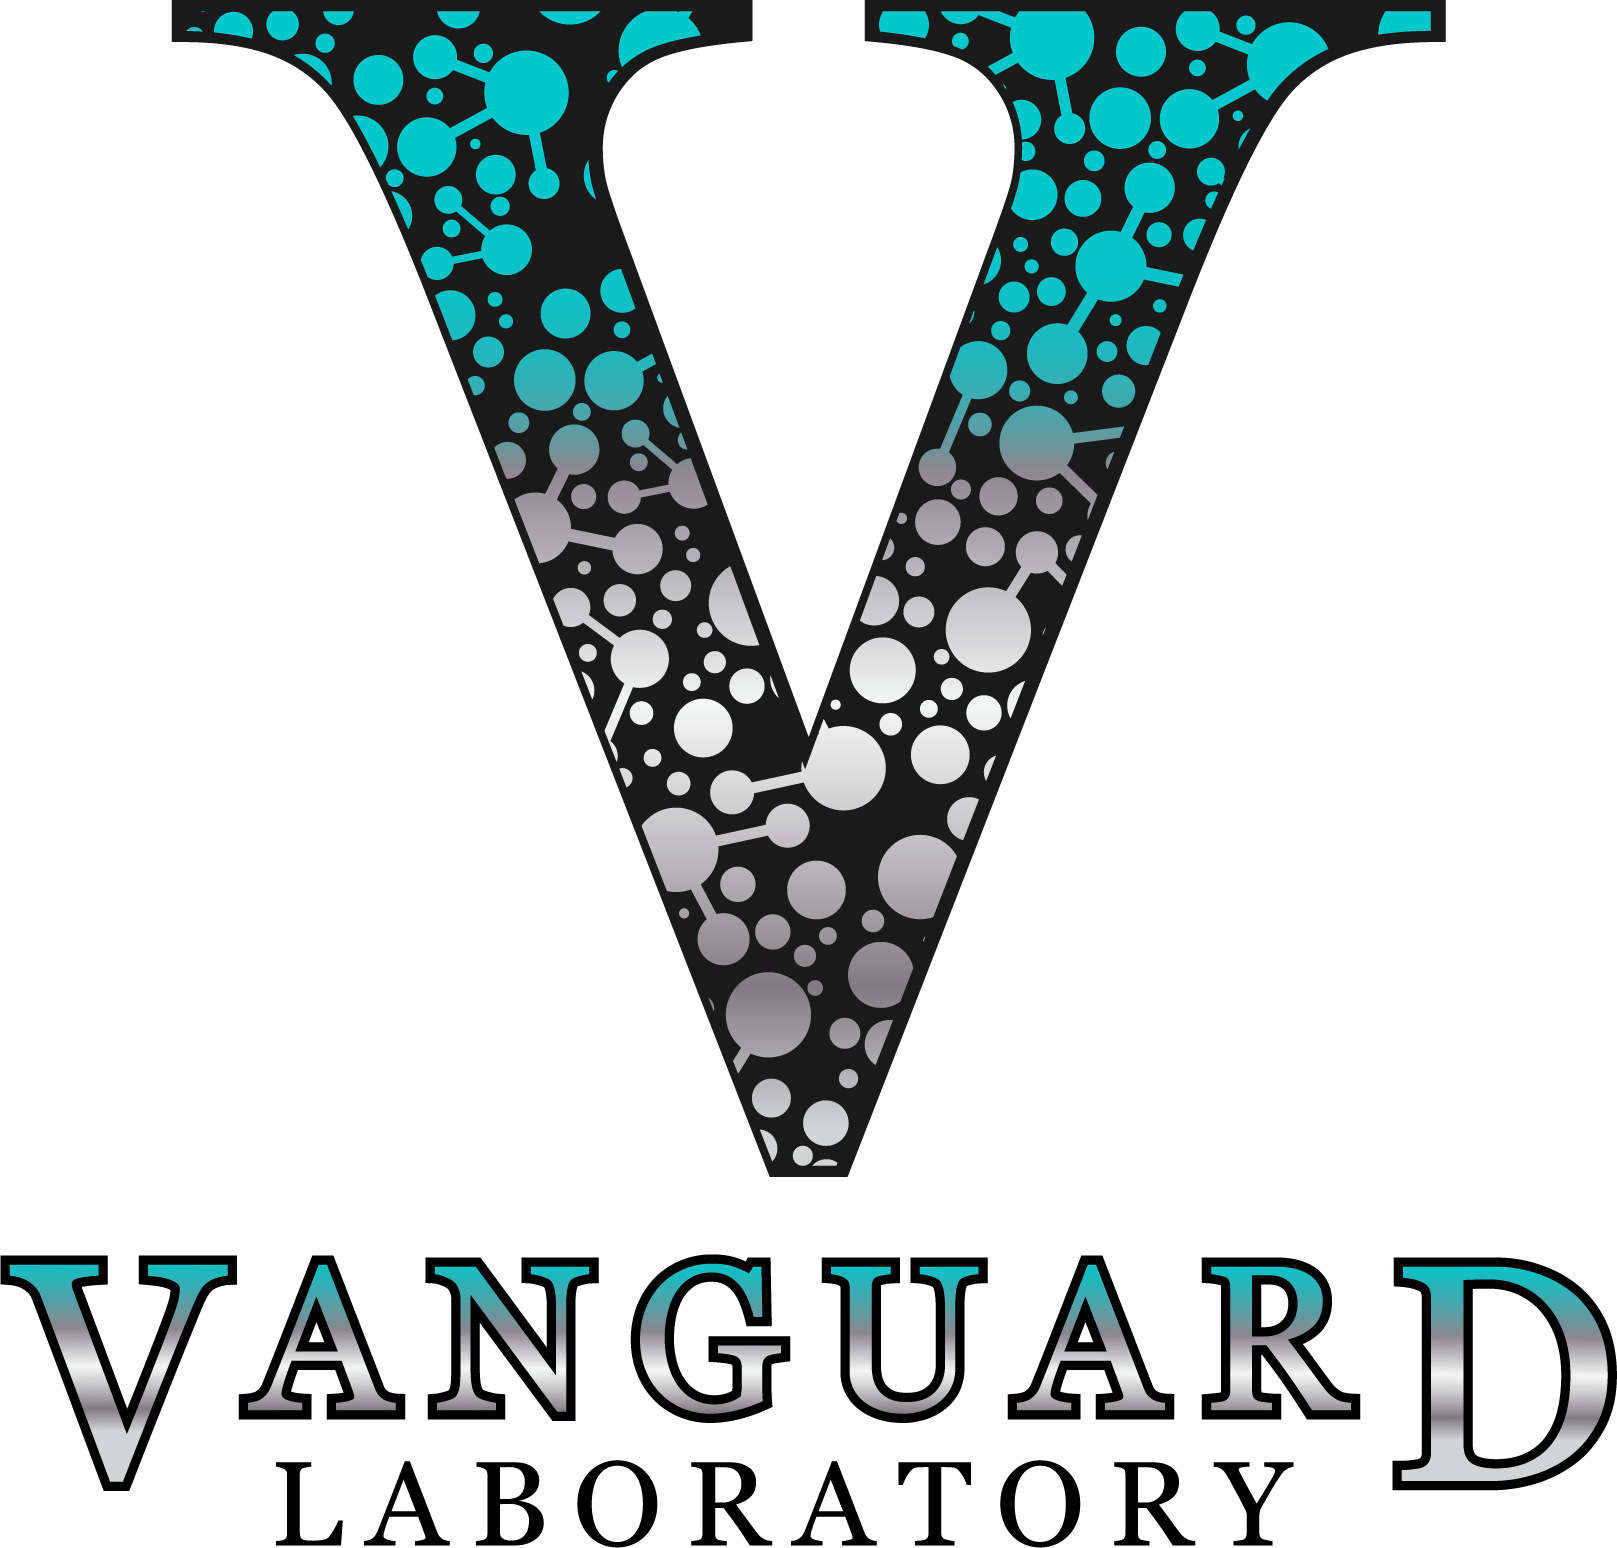 Vanguard Laboratory - <span>Vanguard Laboratory is ISO/IEC 17025:2017 Accredited environmental & quality assurance lab